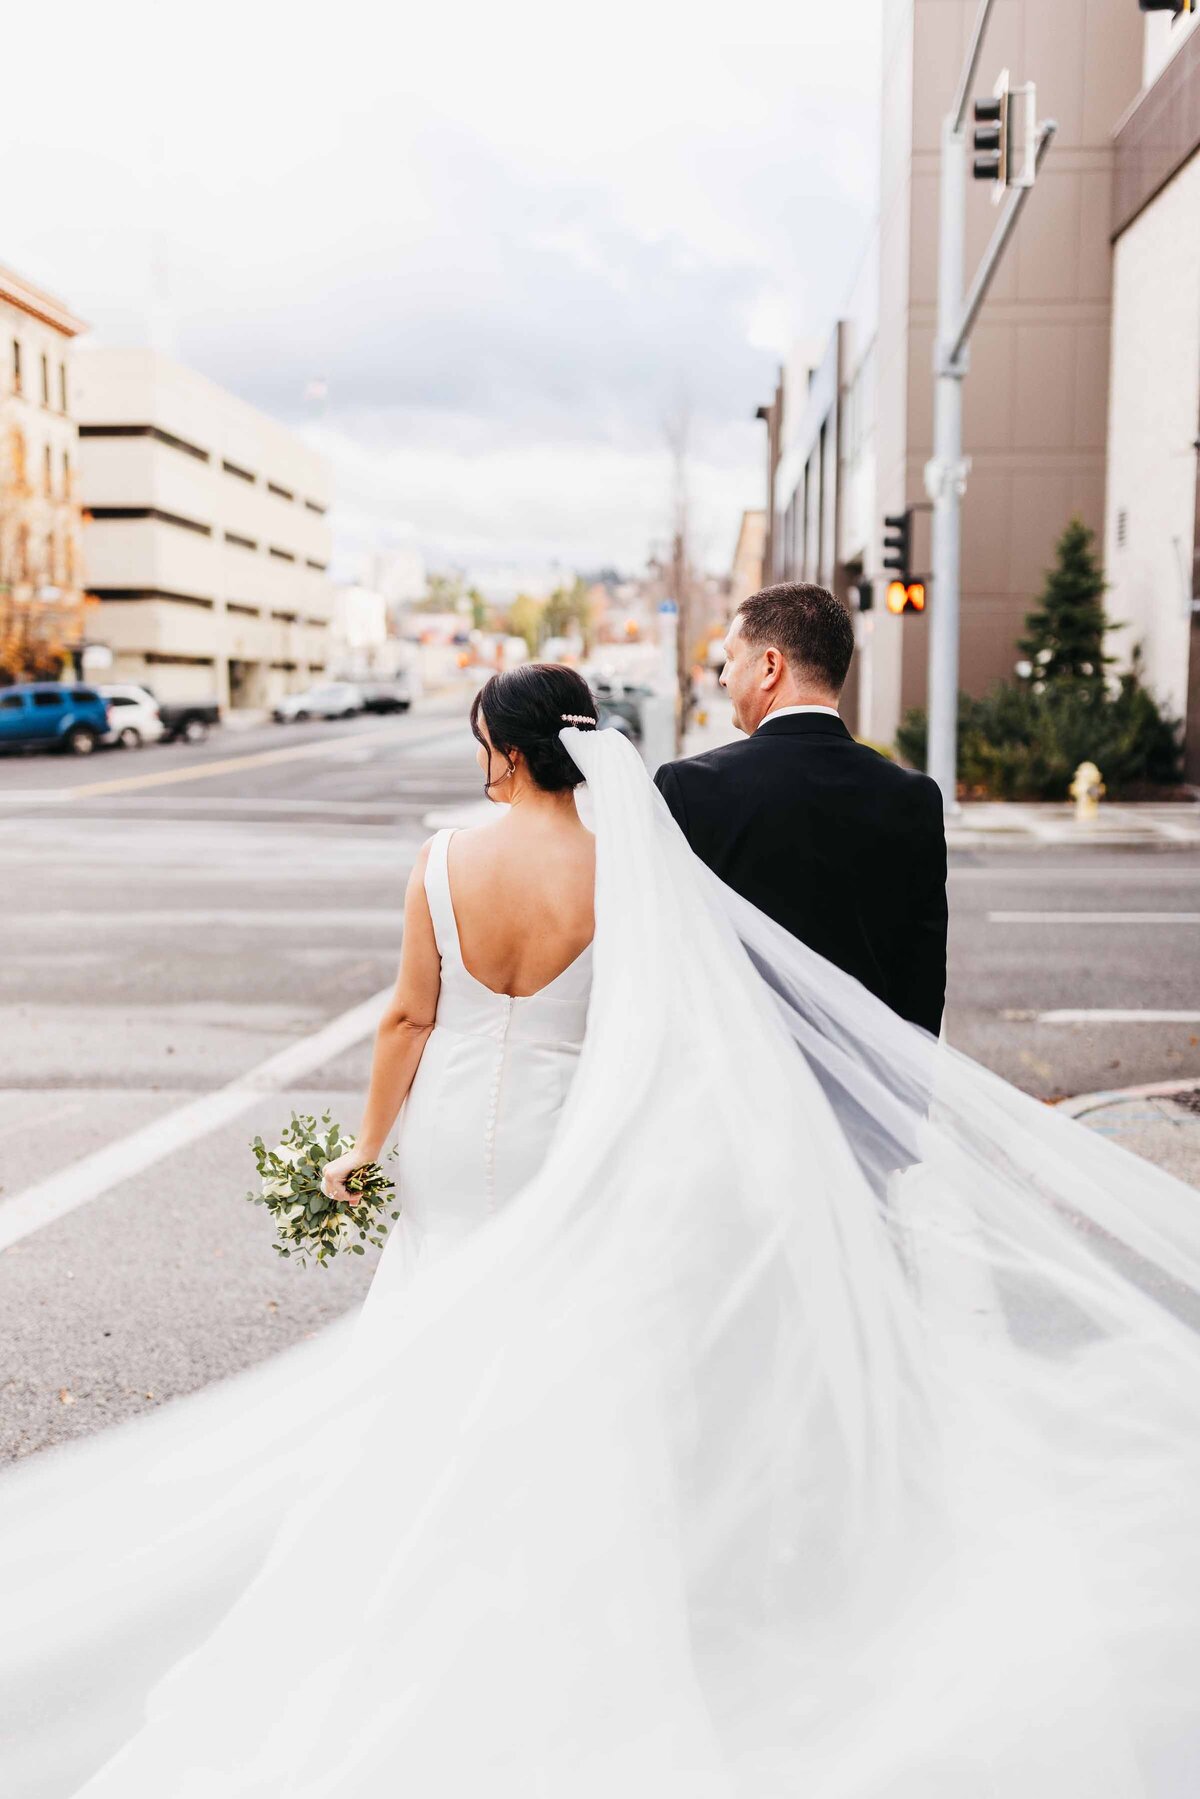 Romantic Urban Downtown Wedding in Spokane Washington - Clara Jay Photo